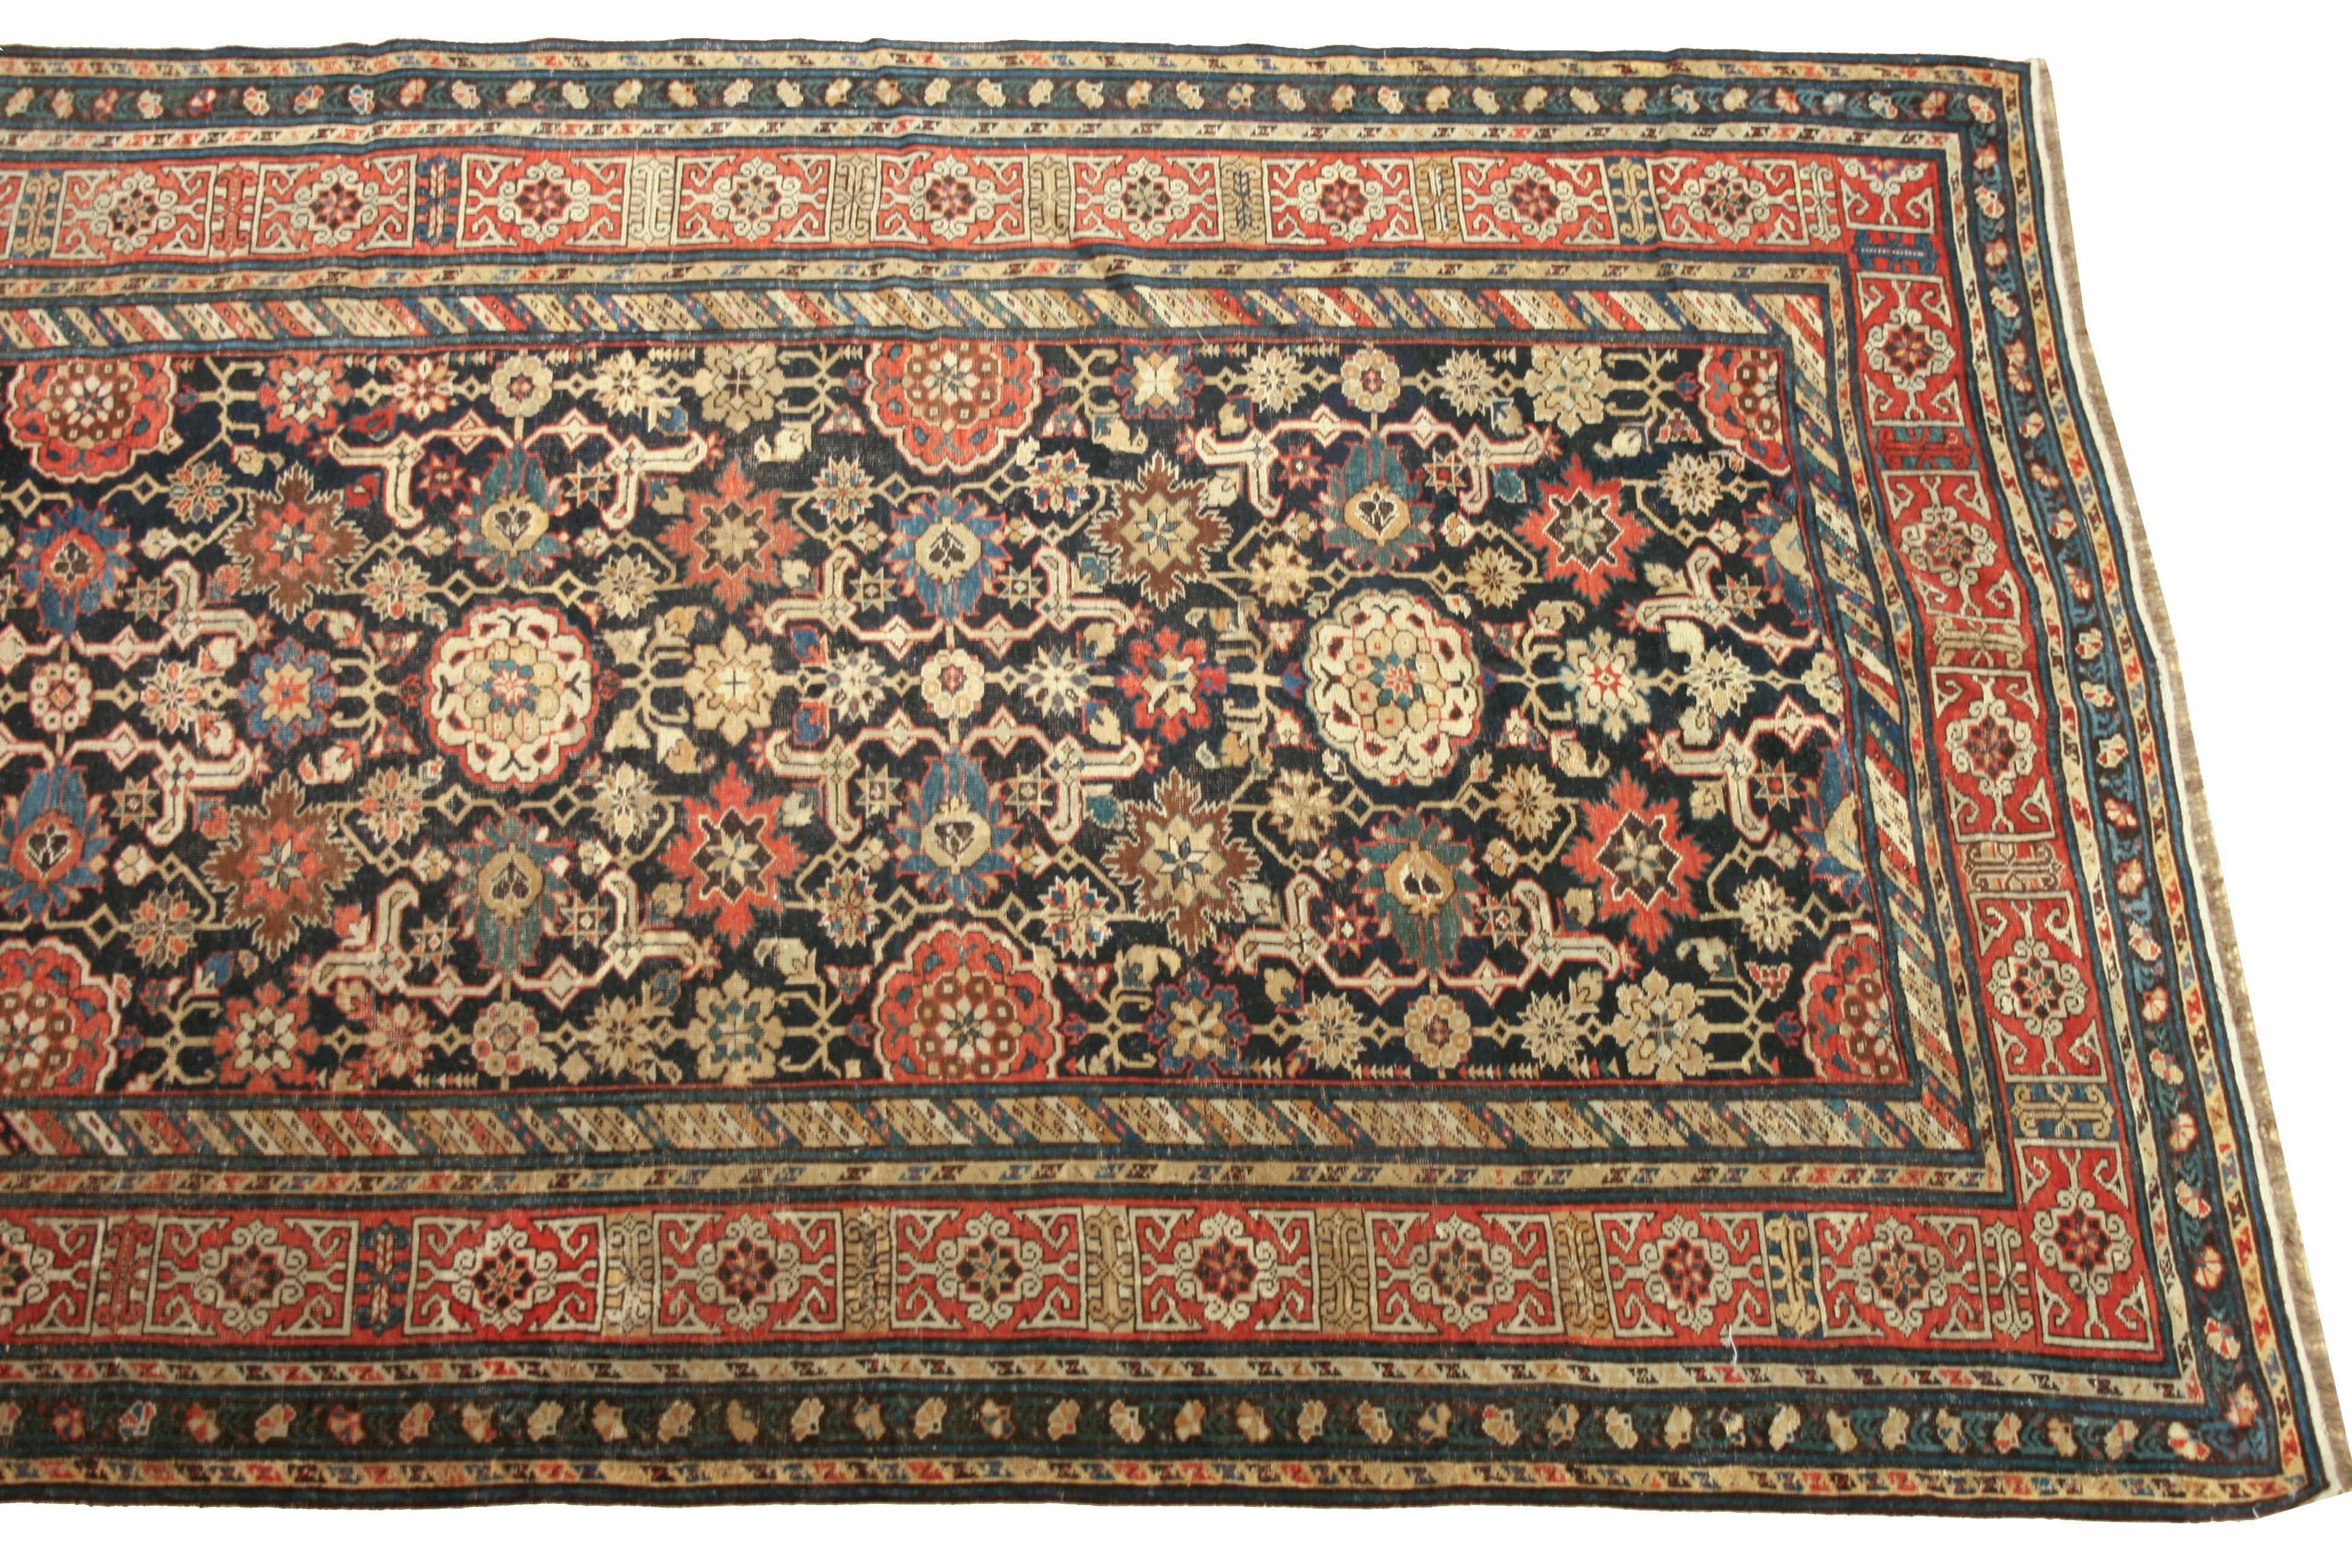 Antique Caucasian Shirvan runner rug, circa 1860. 19th century Shirvan runner rug. Colors: Navy, coral, tan, teal and royal blue. Size: 5'2 x 13'2.